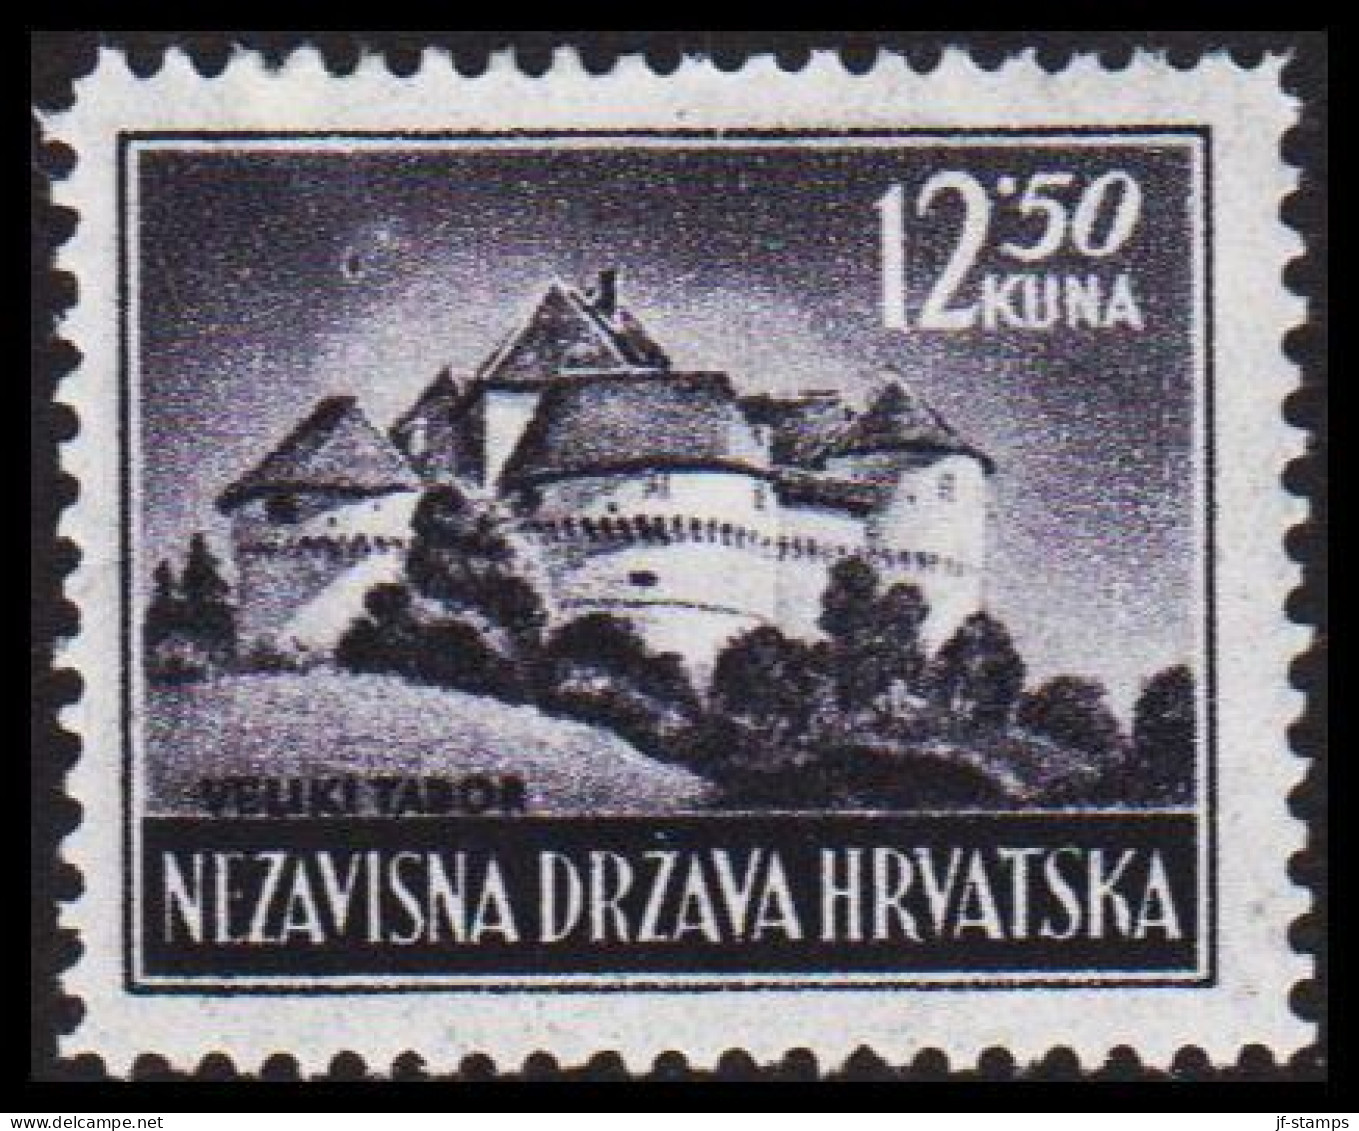 1943-1944. HRVATSKA Landscapes 12,50 KUNA. Hinged. (Michel 99) - JF546058 - Kroatien